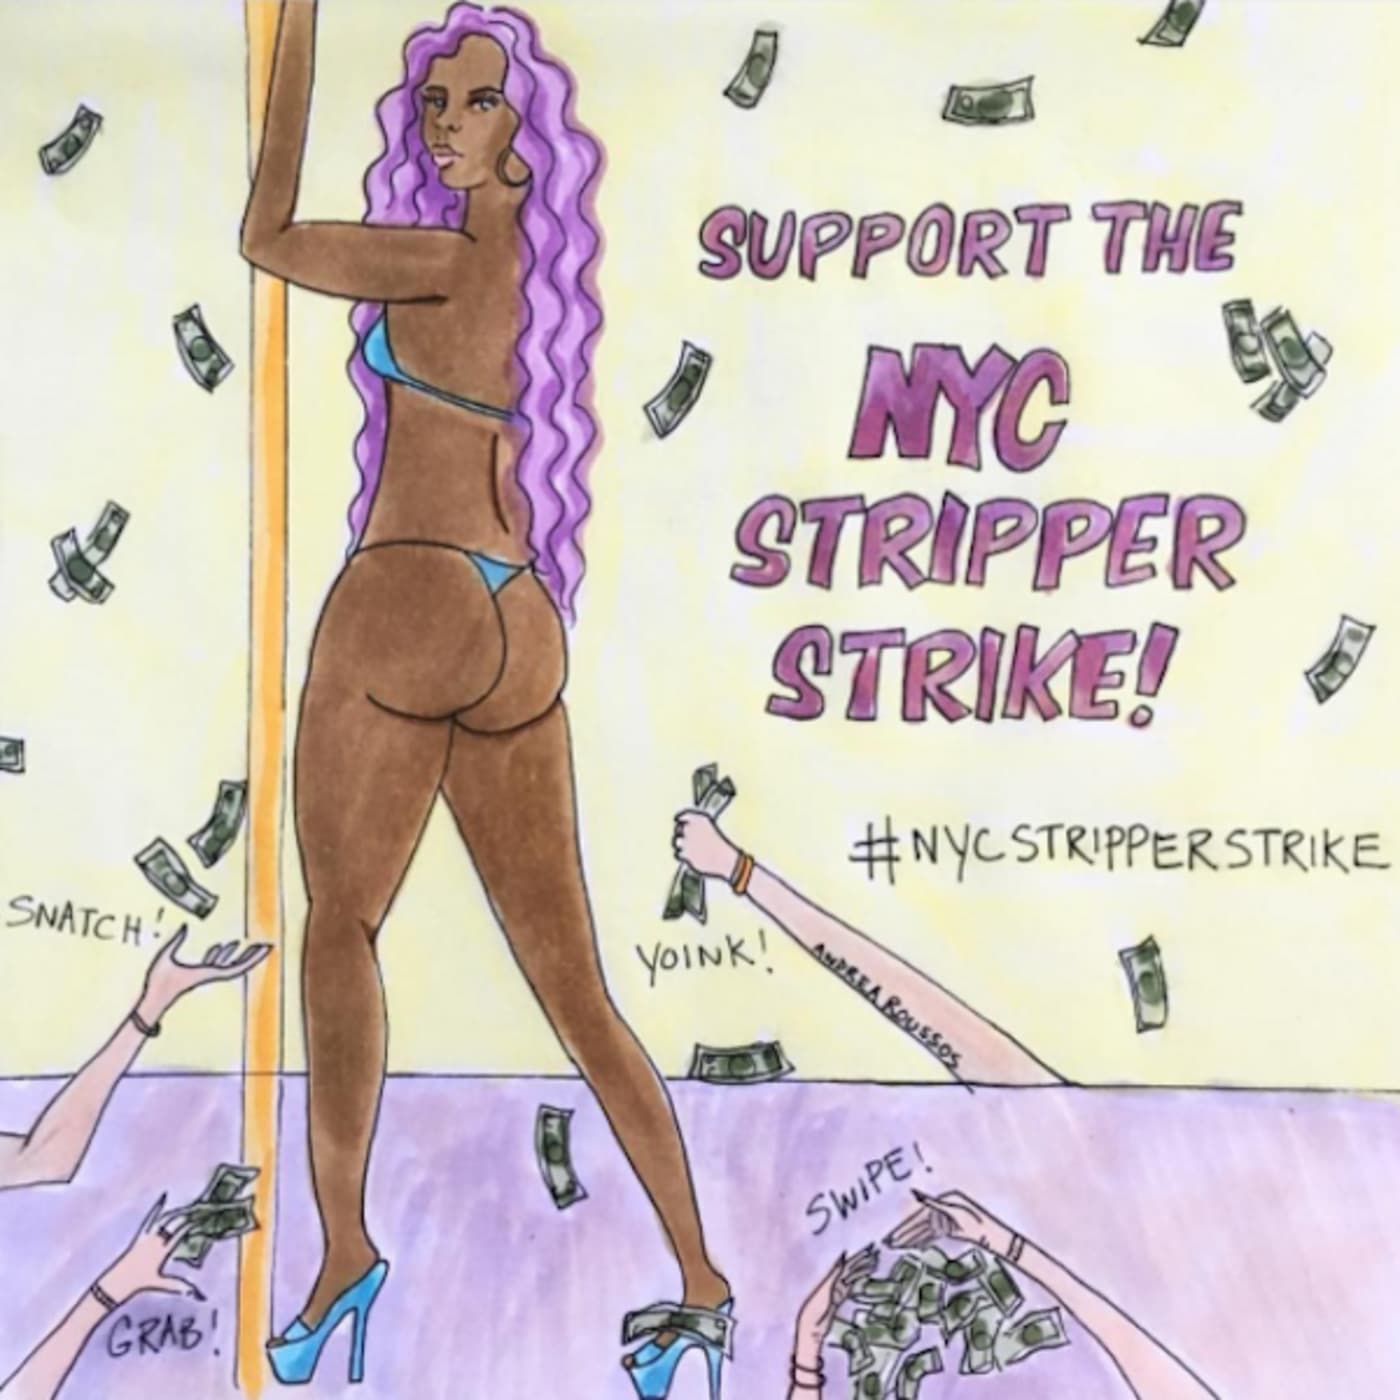 NYC stripper strike IG